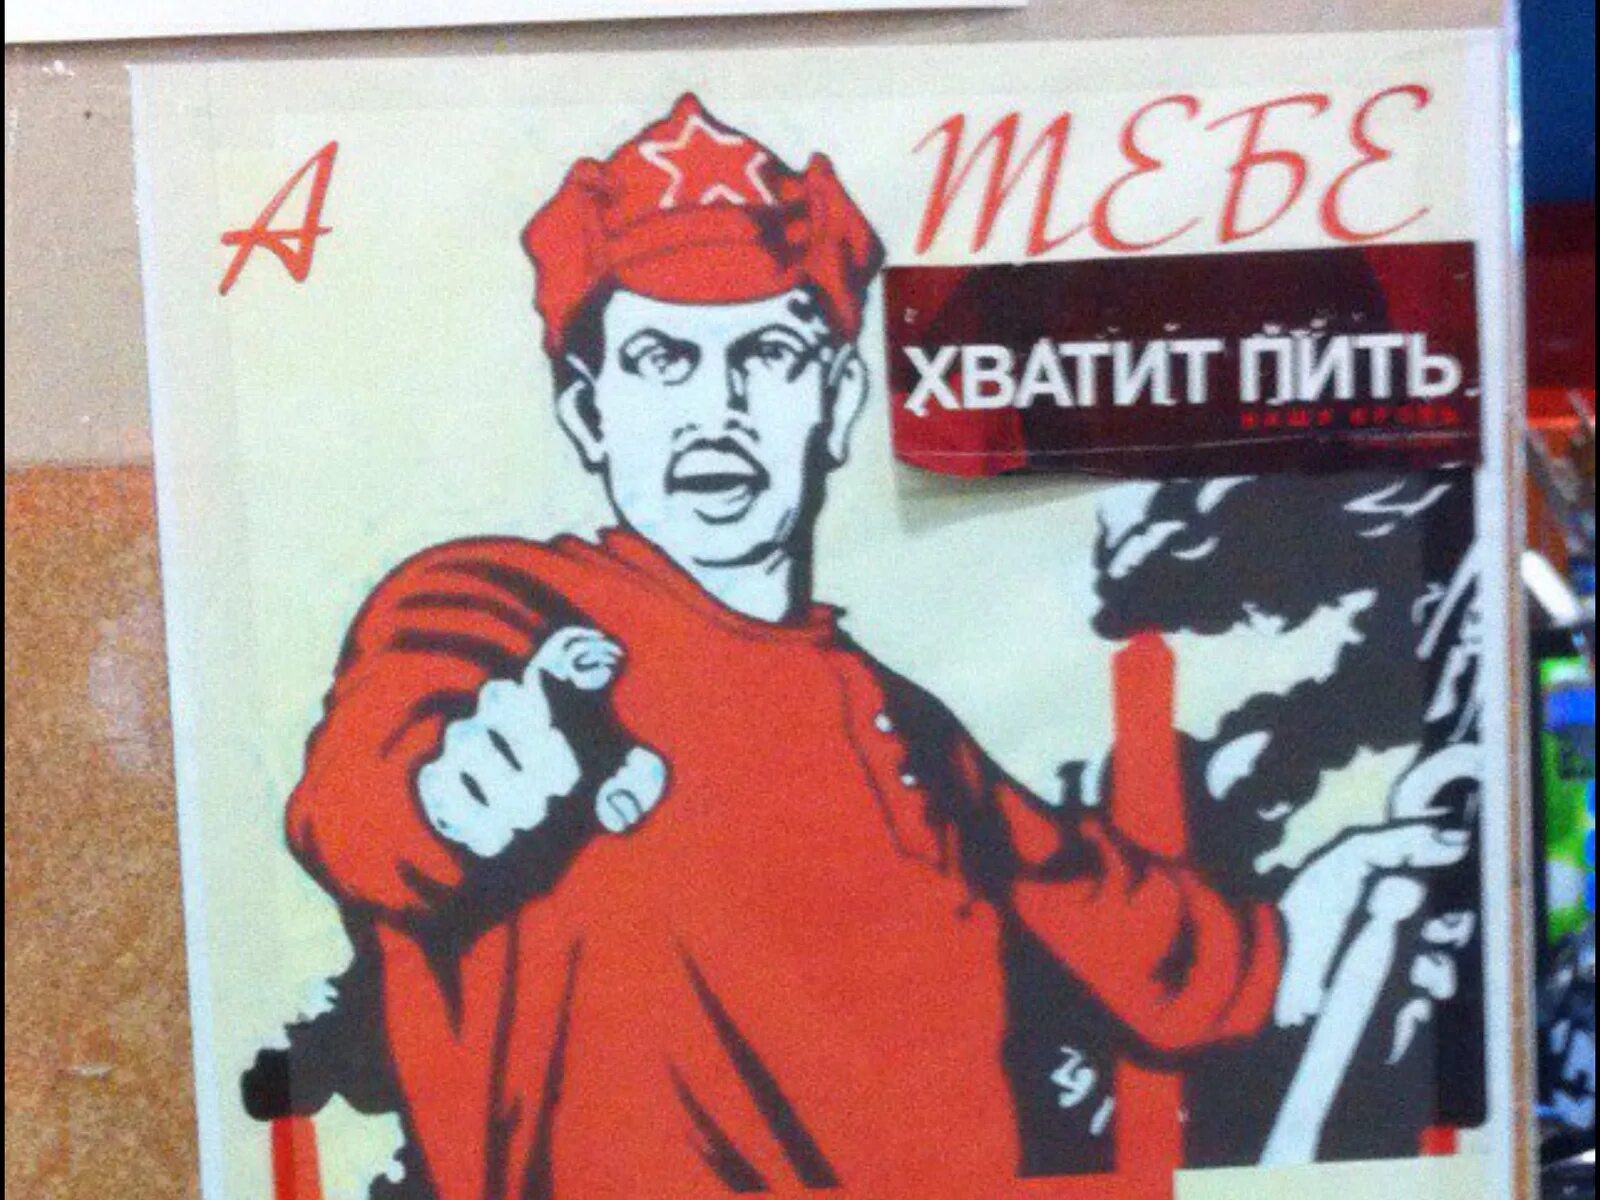 Хватит. Плакат хватит пить. Хватит пить советские плакаты. Плакат хватит бухать. Хватит пить.